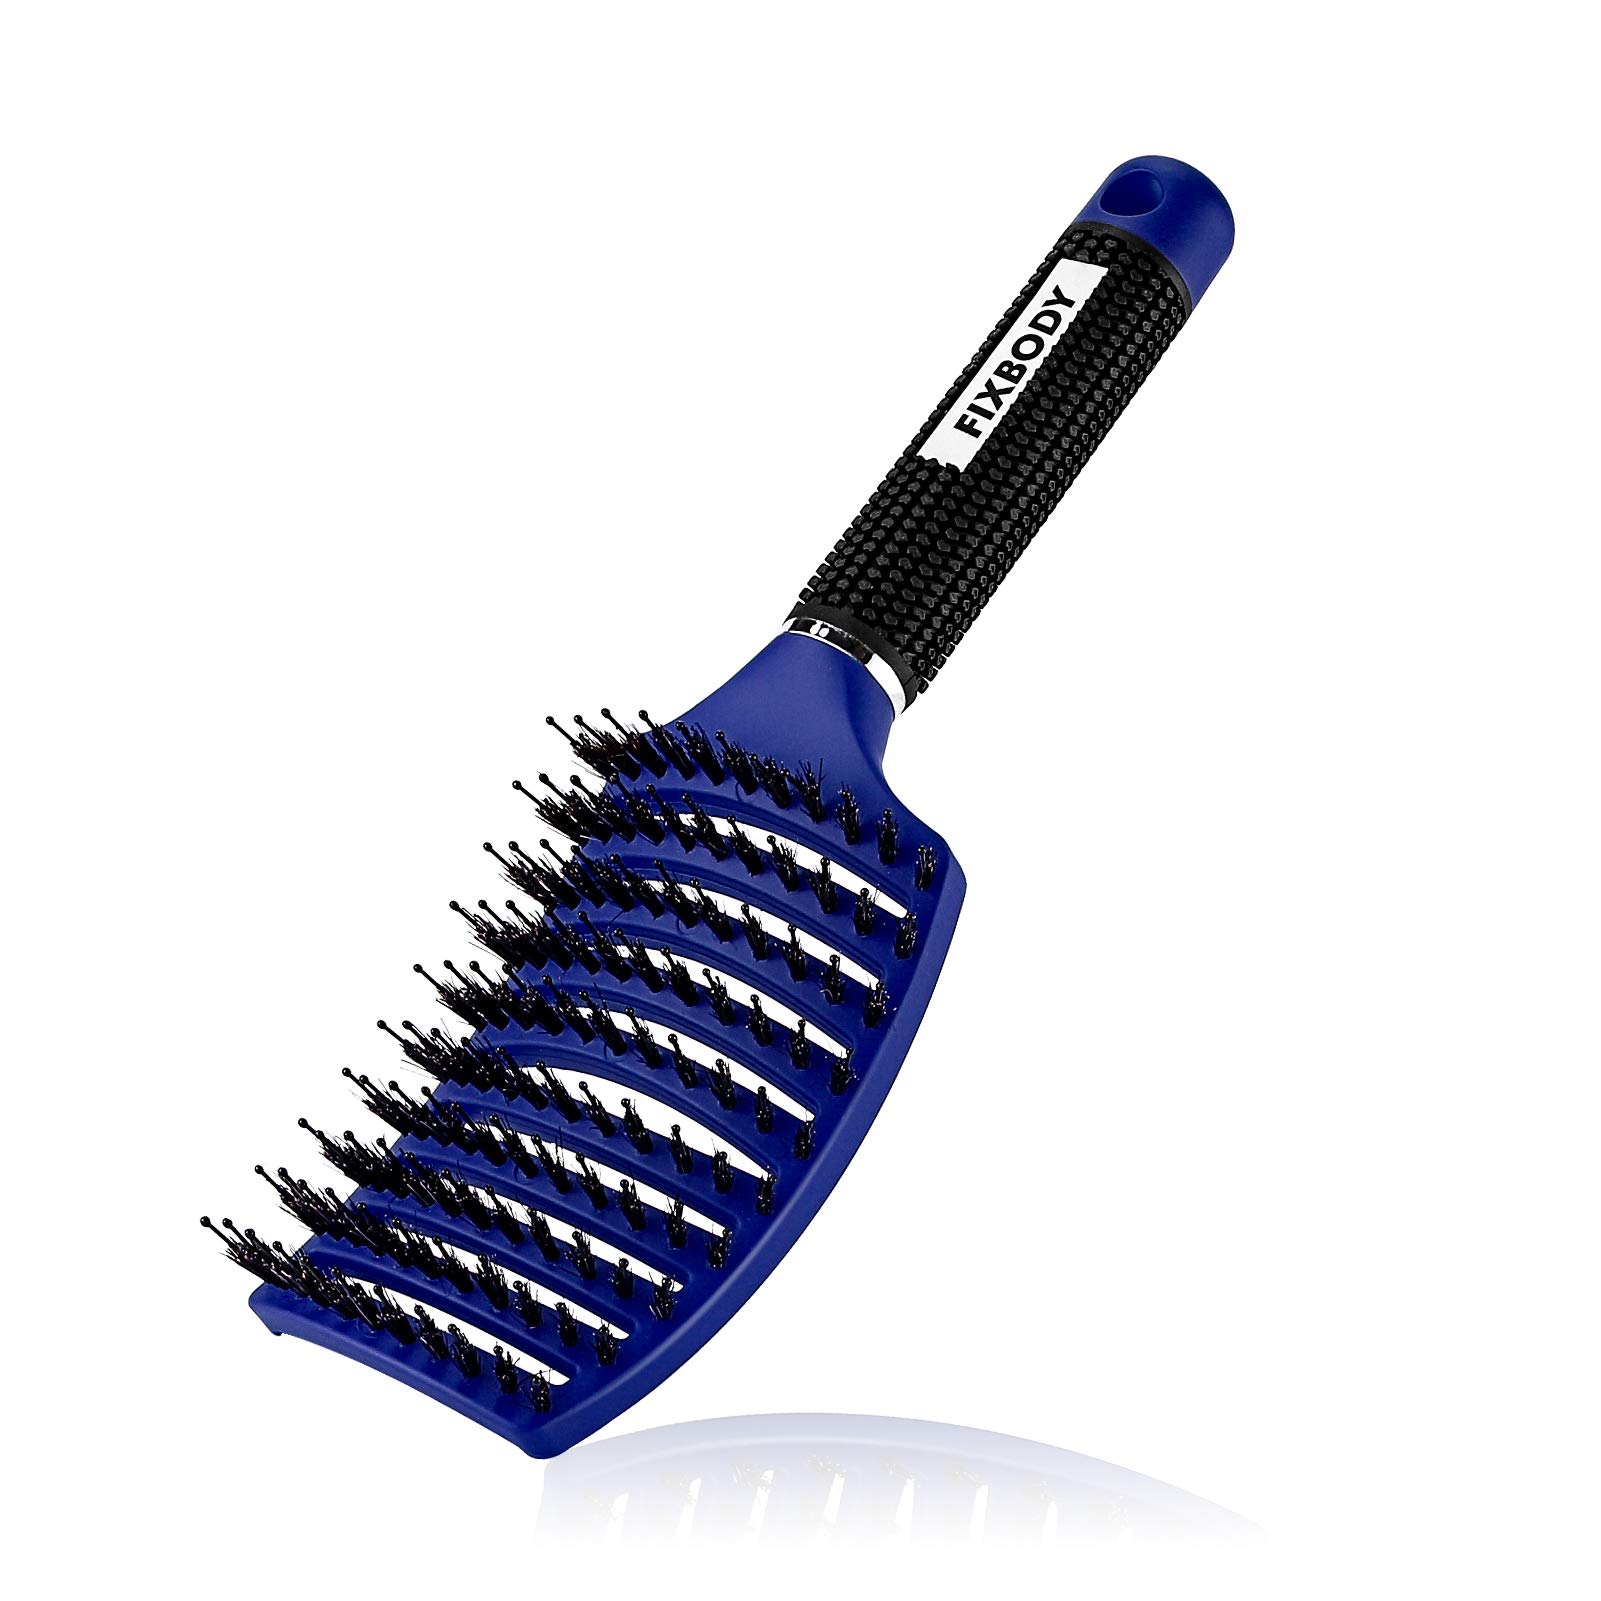 Dropship EZGOODZ Gray Vented Hair Brush 8 Inch. 12 Pack Of Plastic